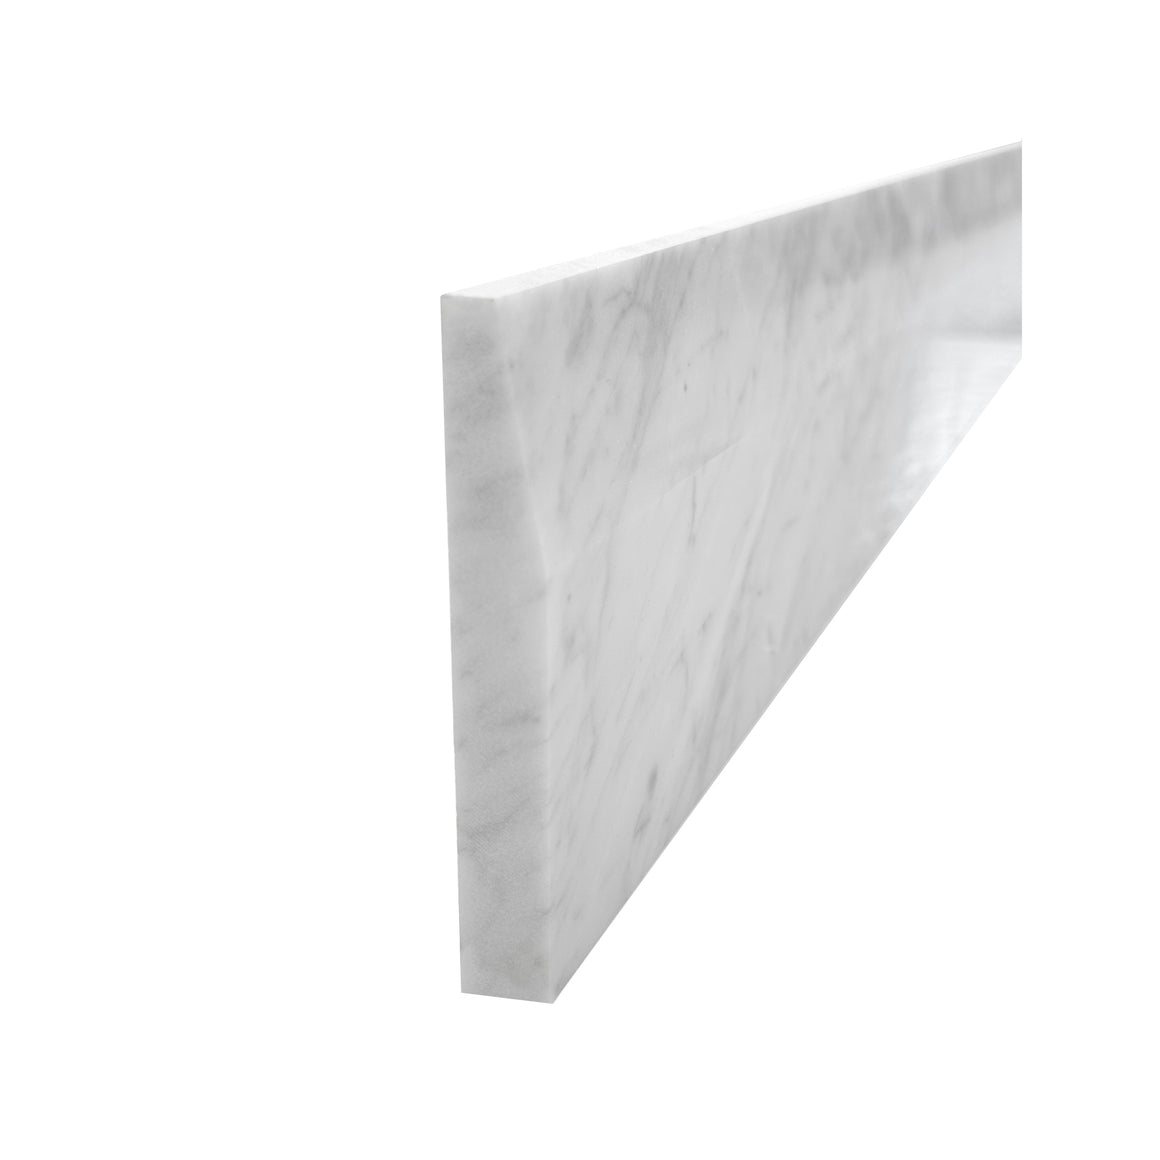 Custom Length Cut From 4x60 White Carrara Marble Thresholds Door Saddles Window Sills Shower Curbs Single Hollywood Bevel Polished